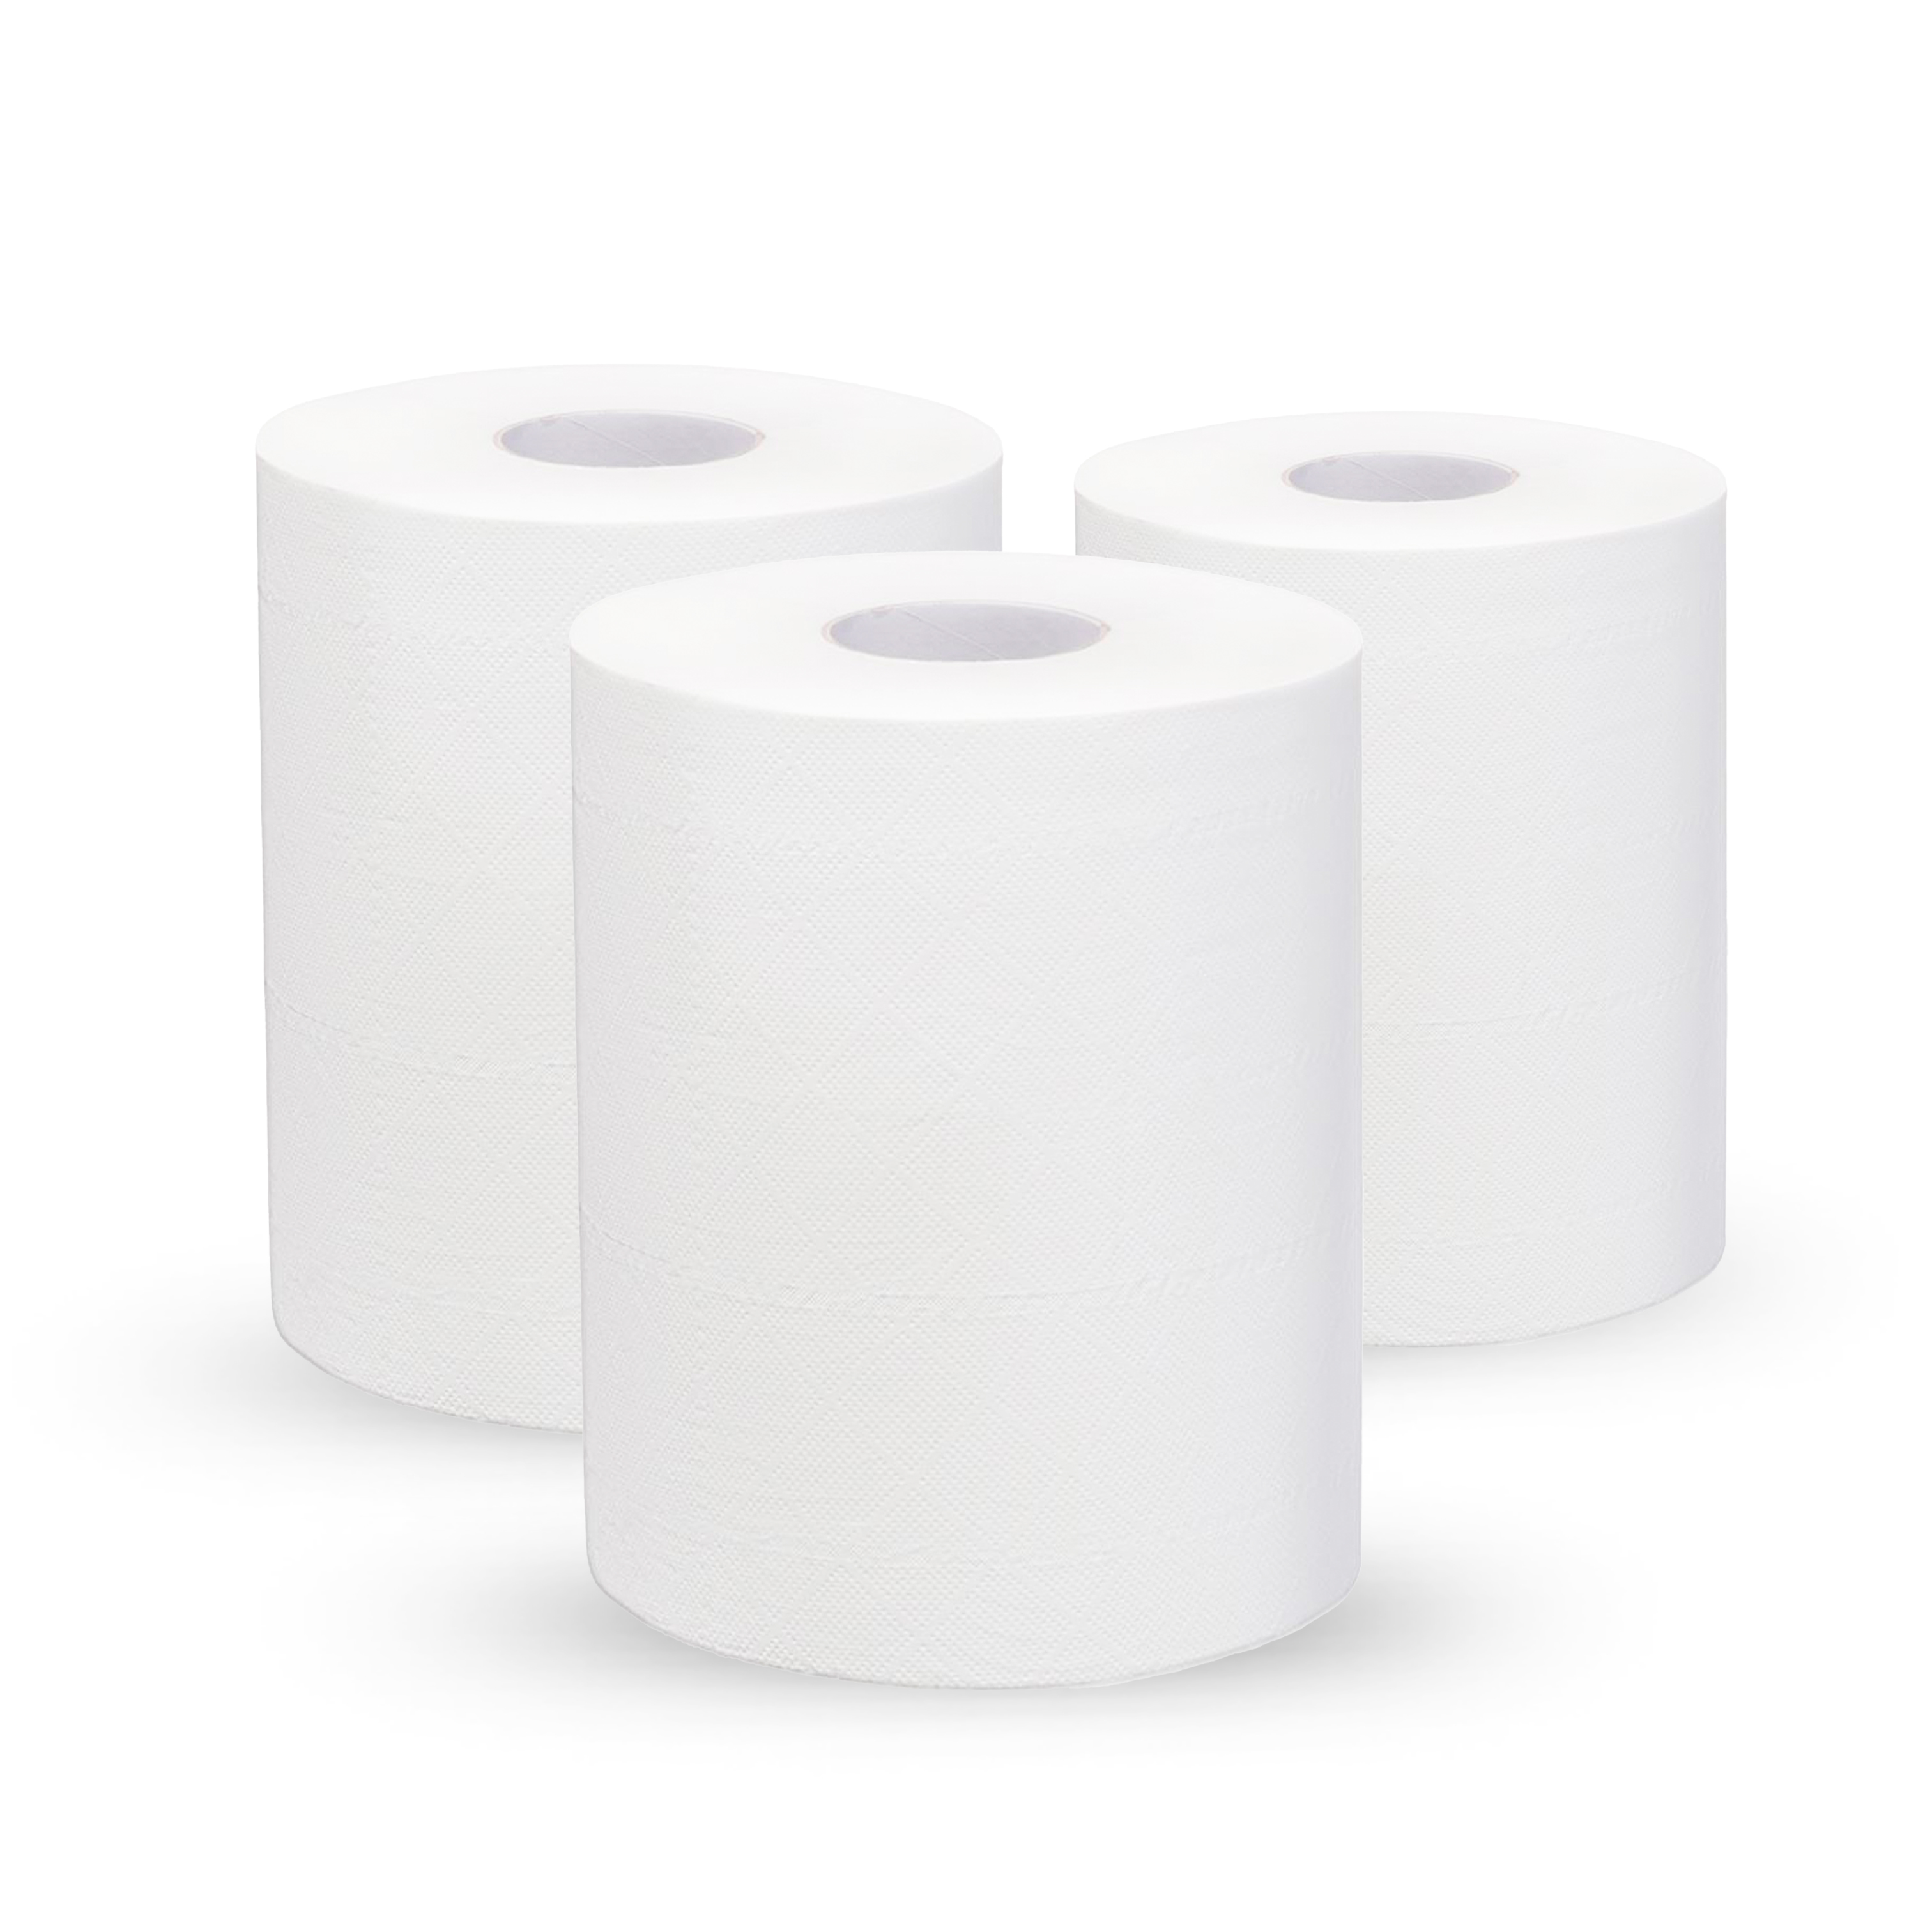 Бумажные полотенца в рулоне 2-сл 150м 16гр Н1 целлюлоза С397 П (6)